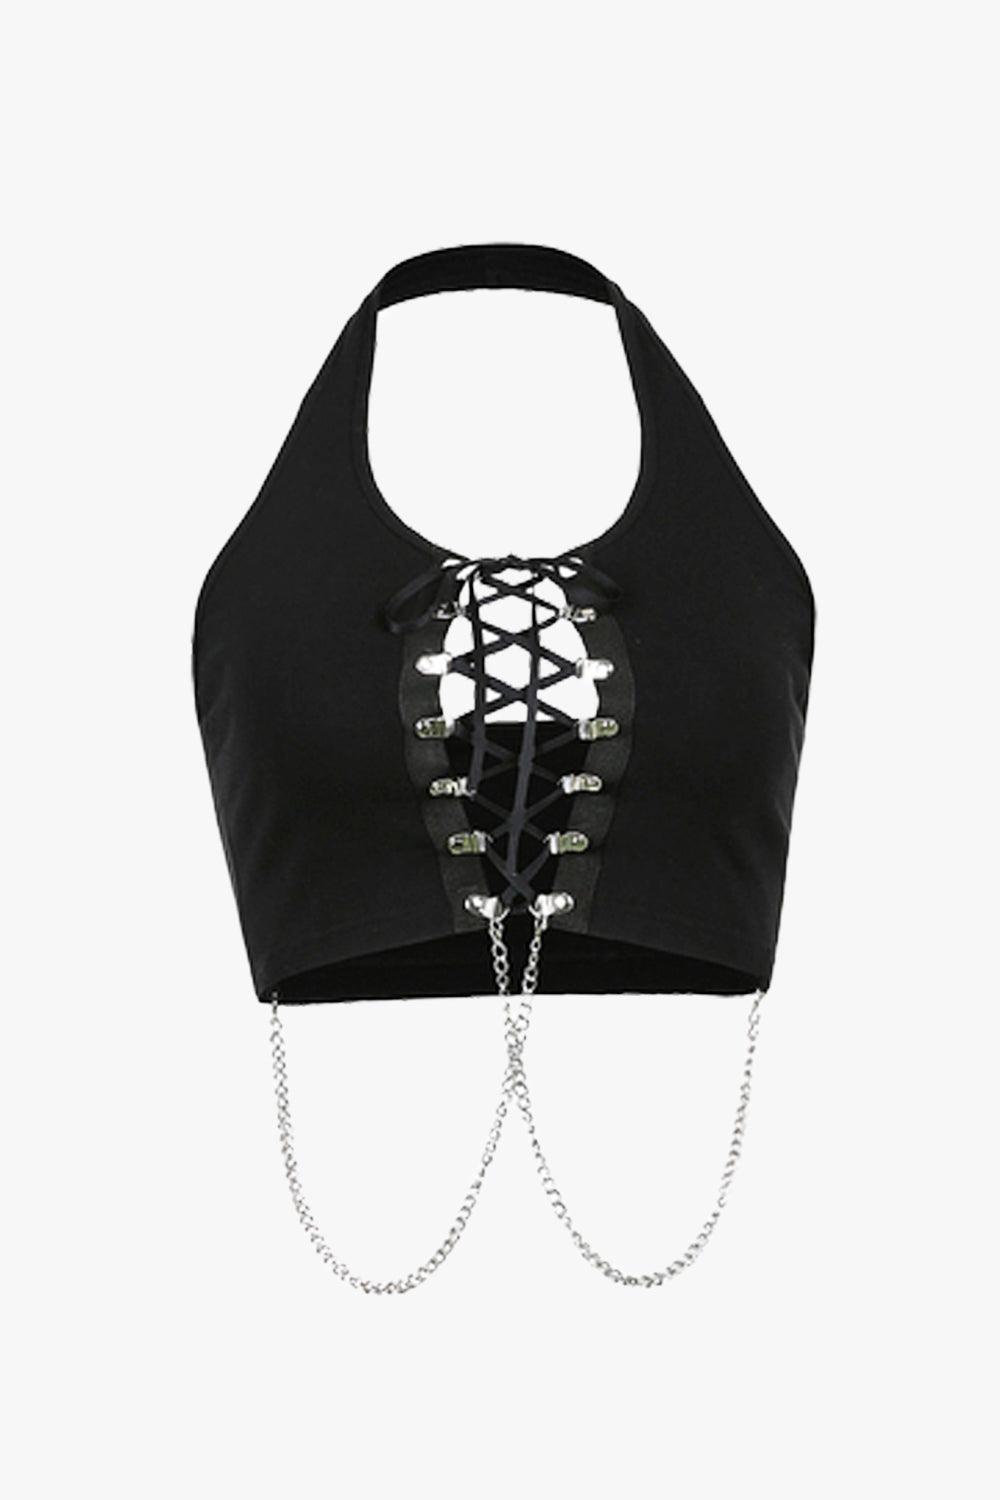 Custom Crop Tops Design Your Own Sports Bras for Women Girls